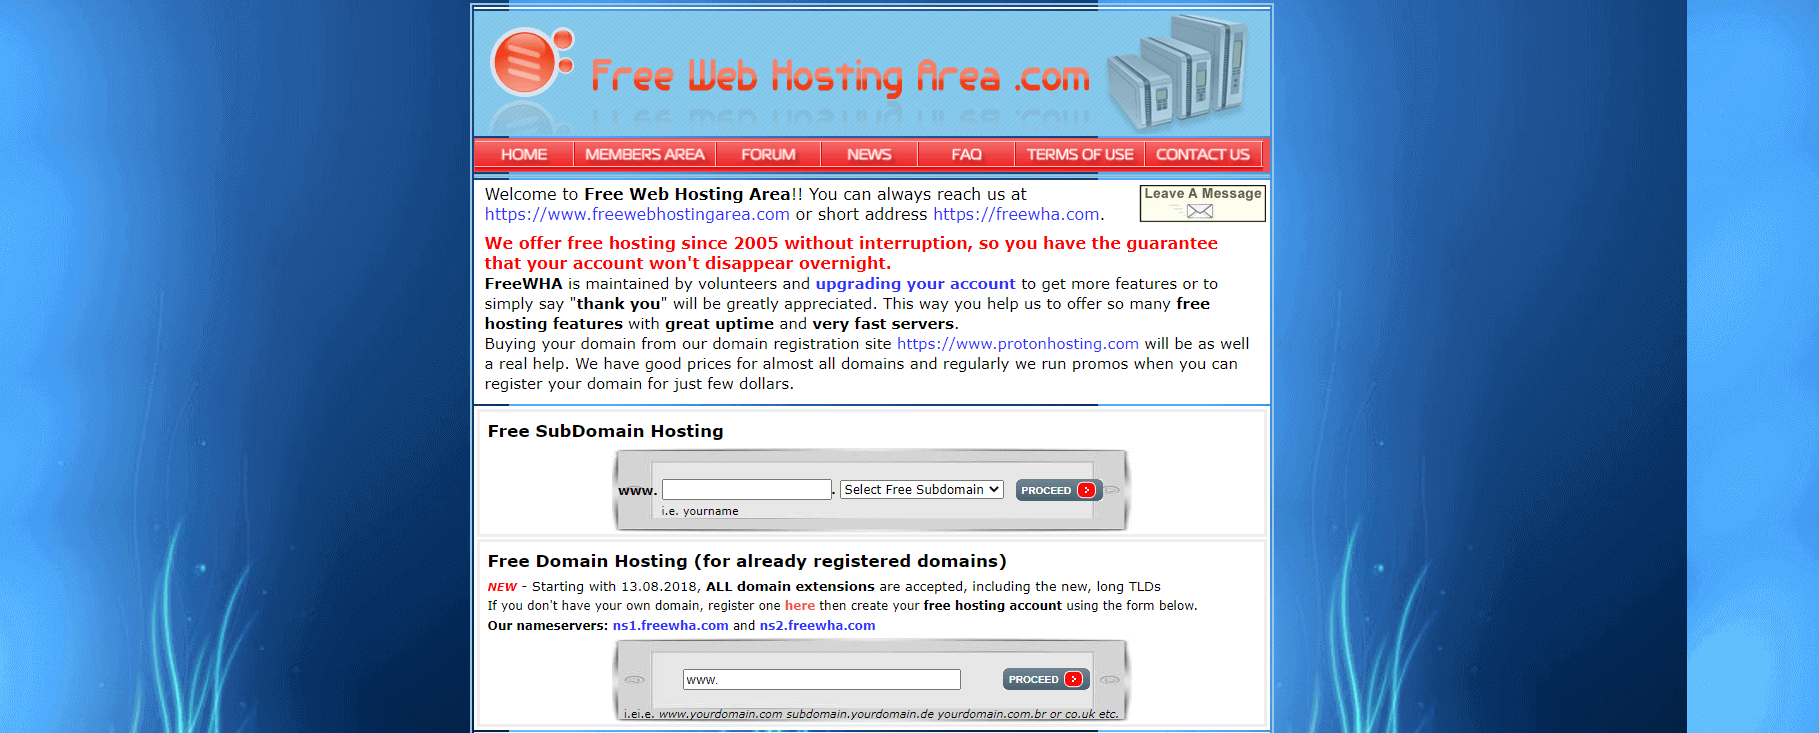 free domain hosting registration